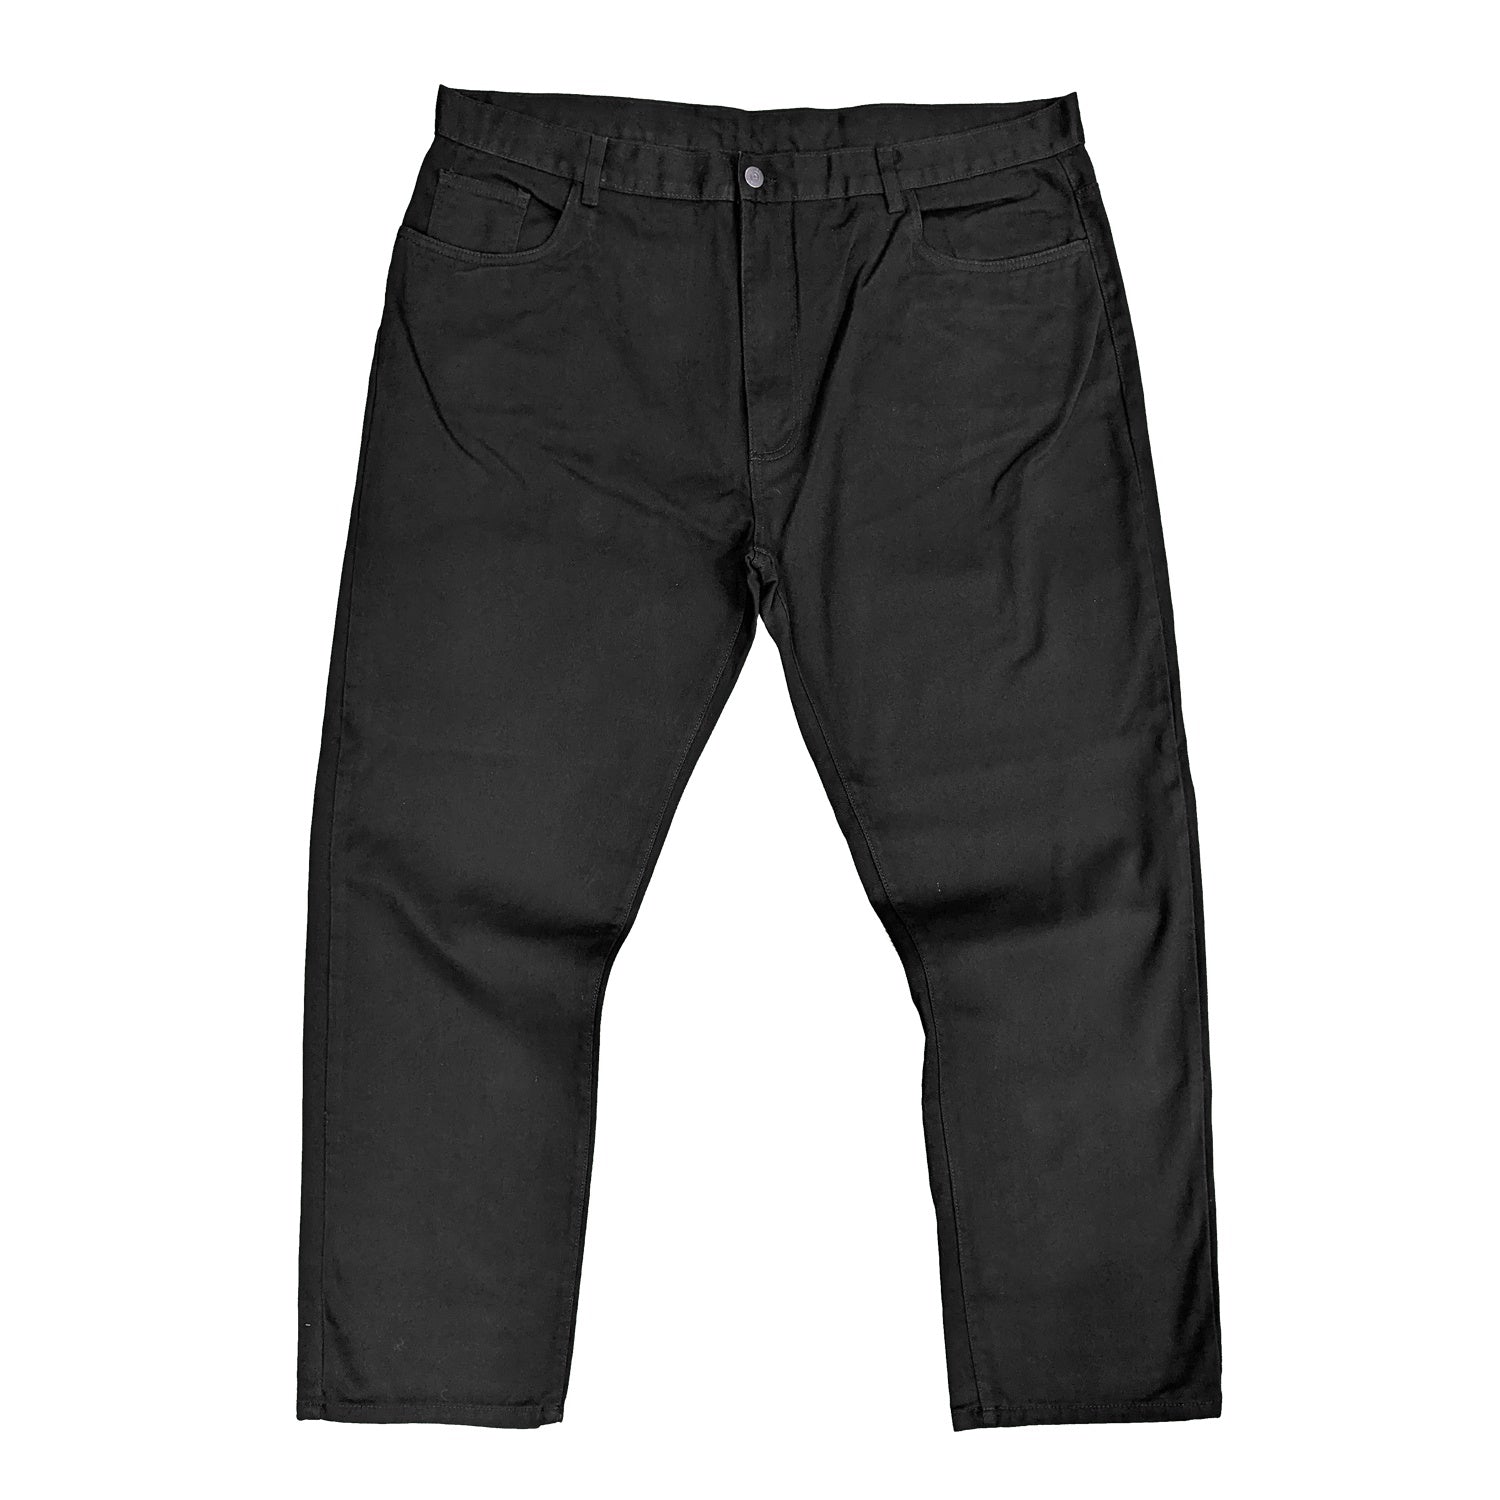 Carabou Twill Basic Jeans - ACJBLK - Black 1